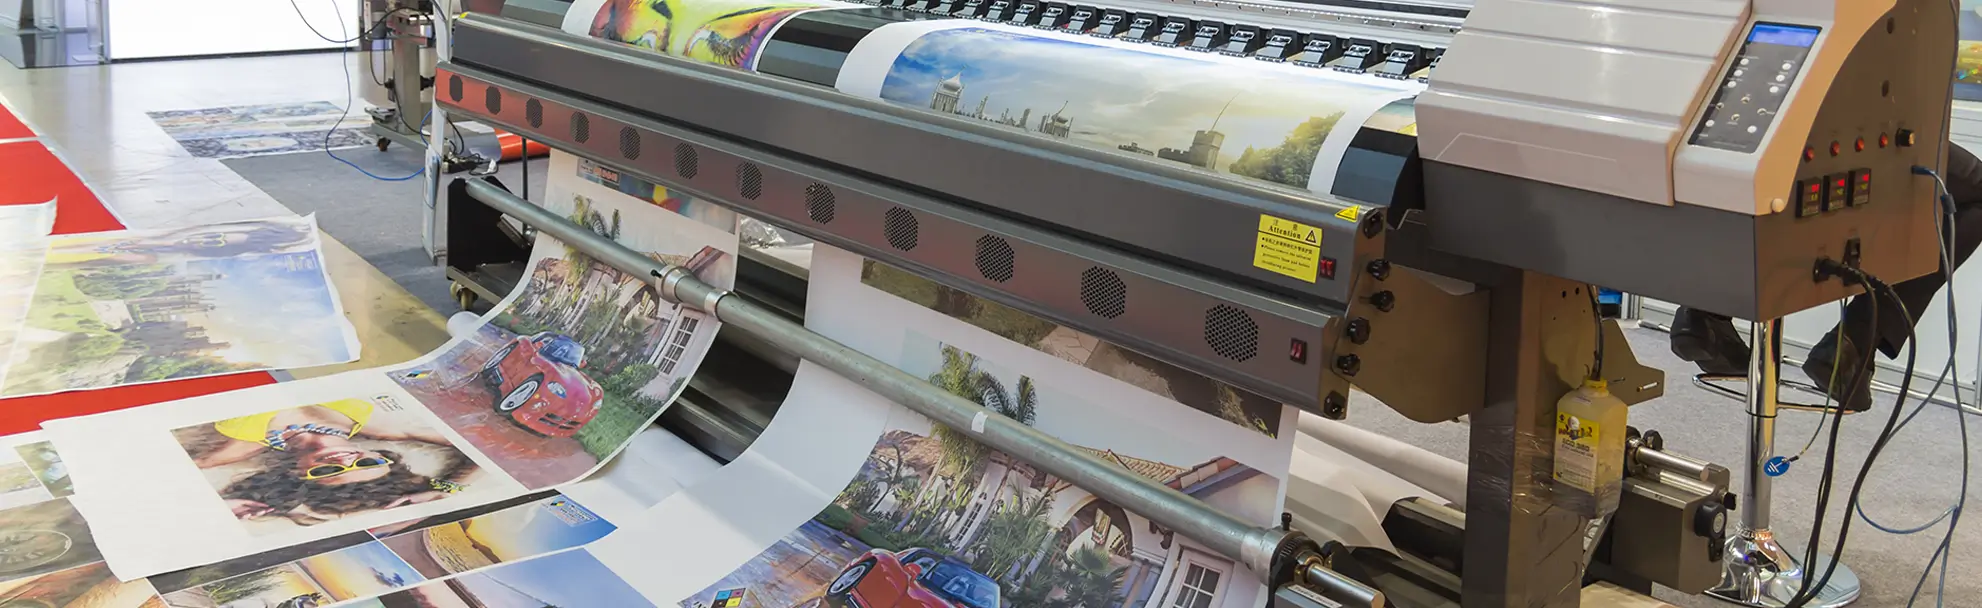 Printer printing large format decals